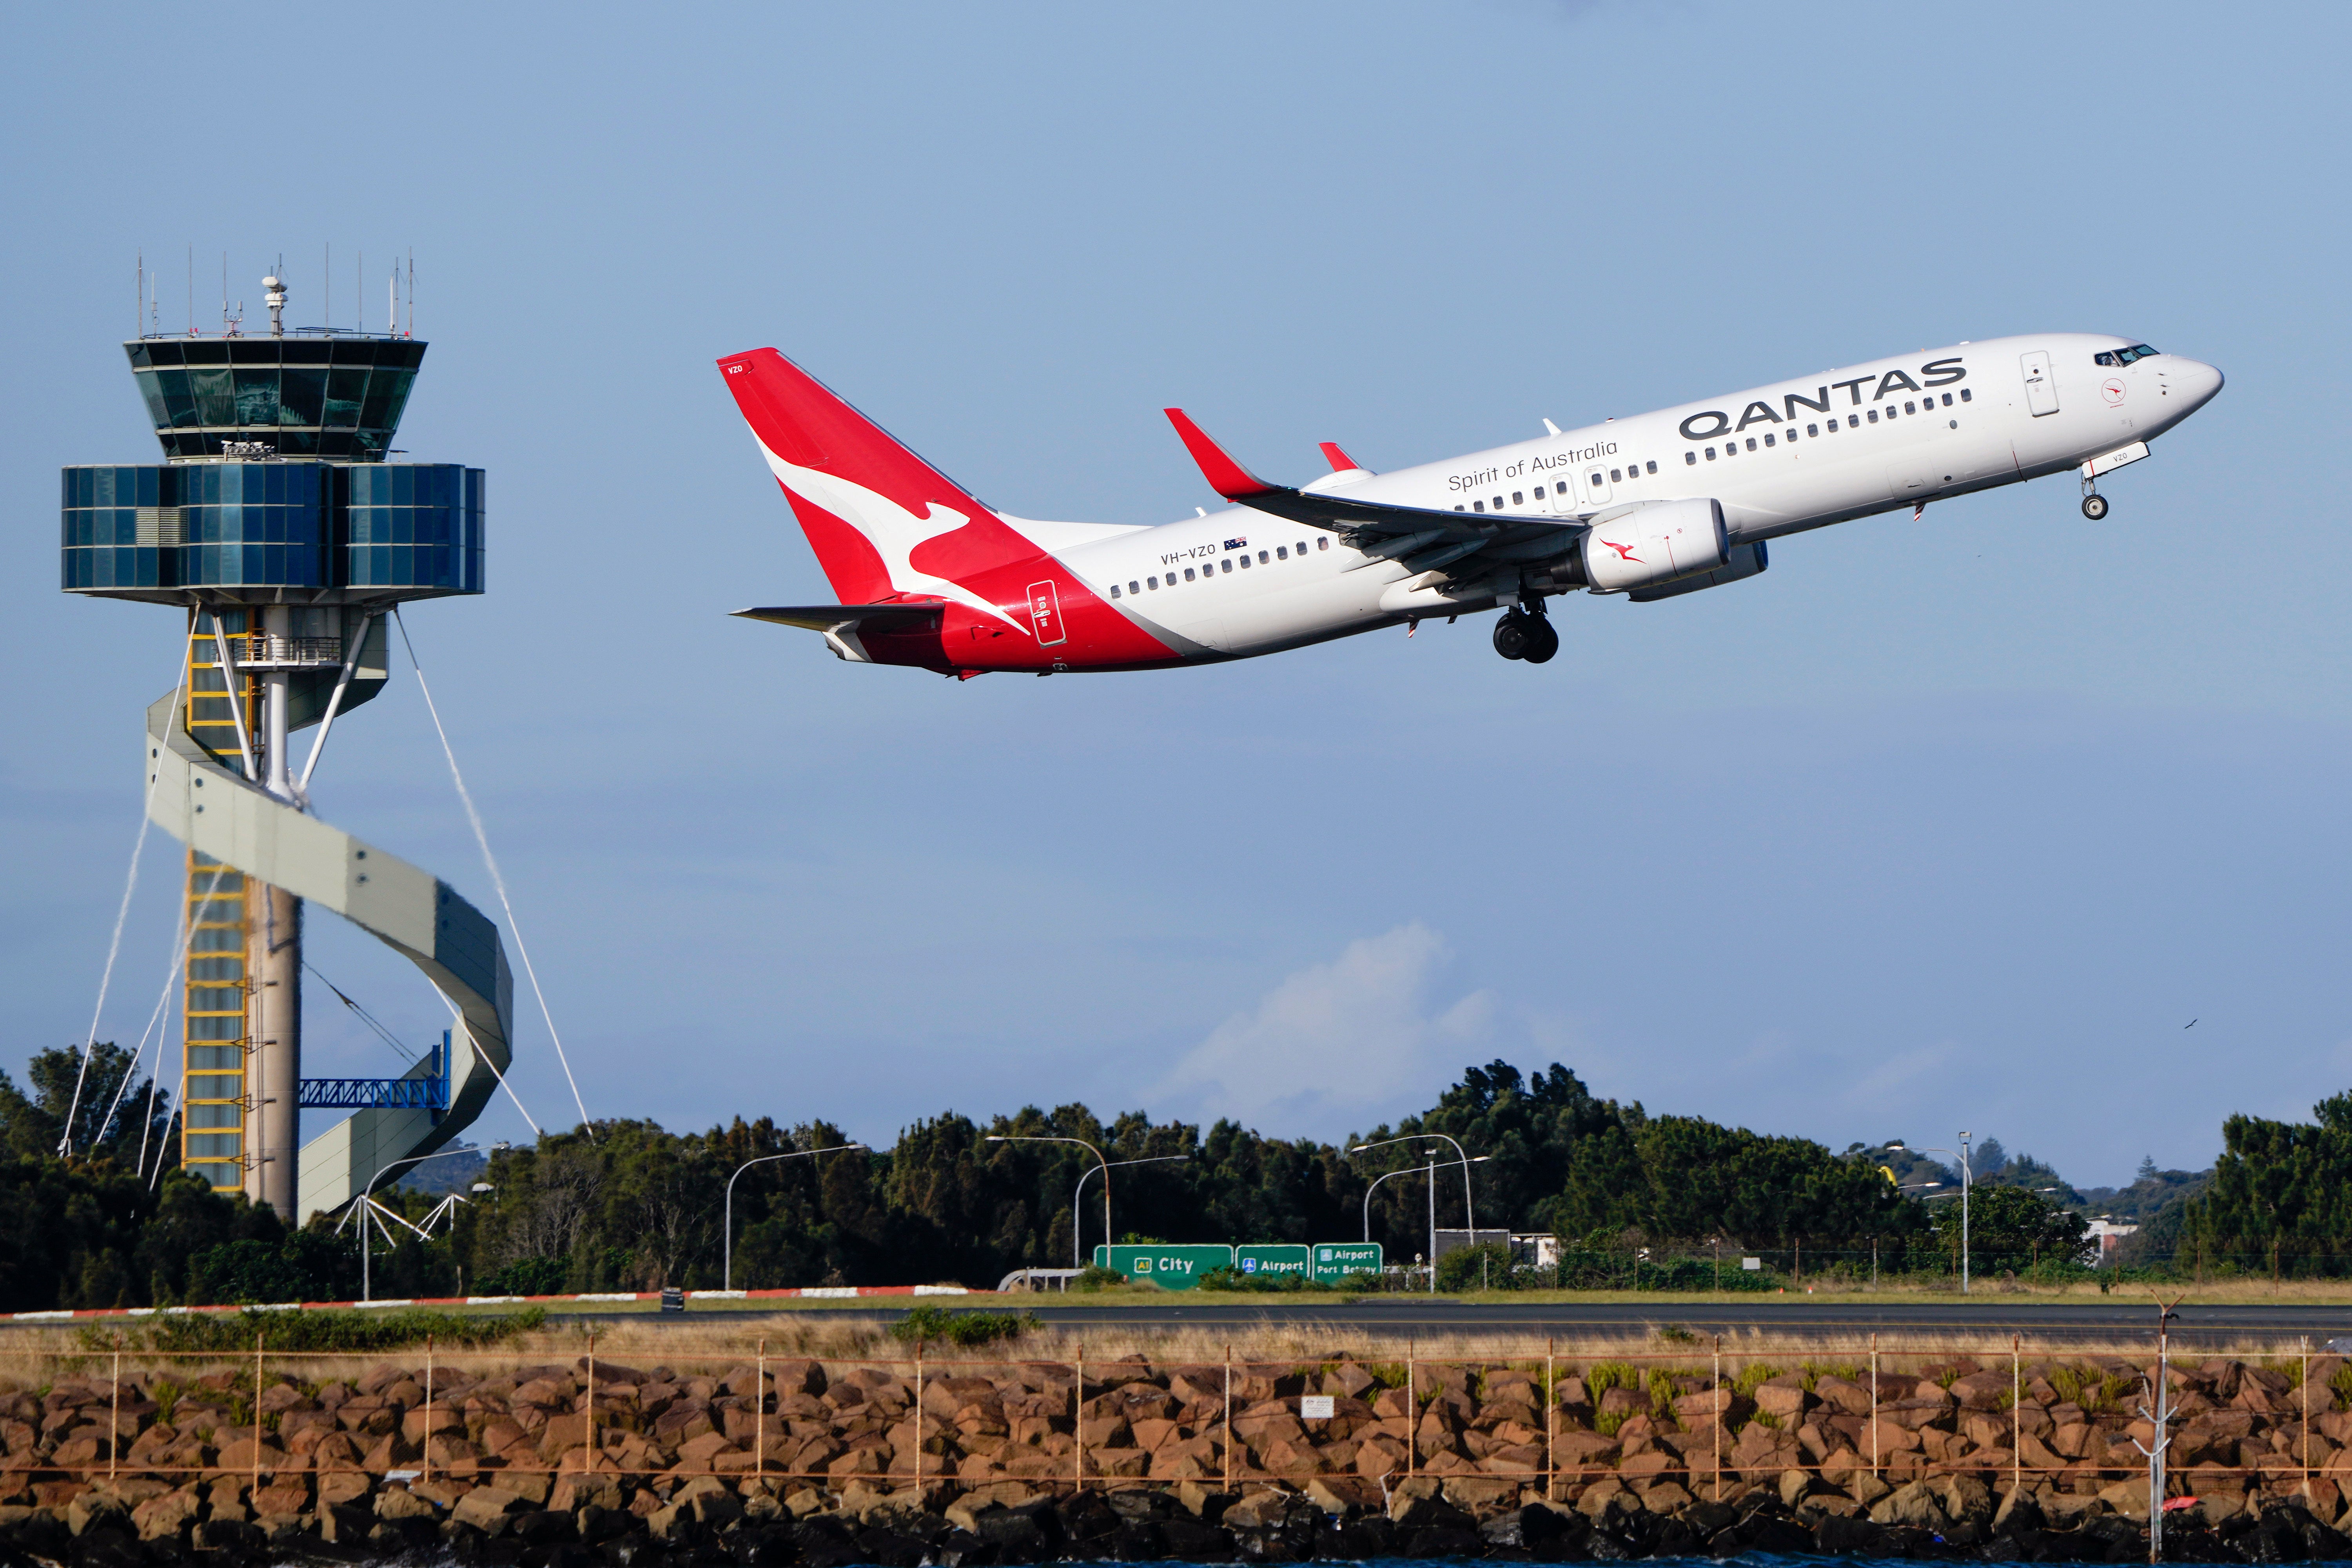 A Qantas Boeing 737 passenger plane takes off from Sydney Airport, Australia